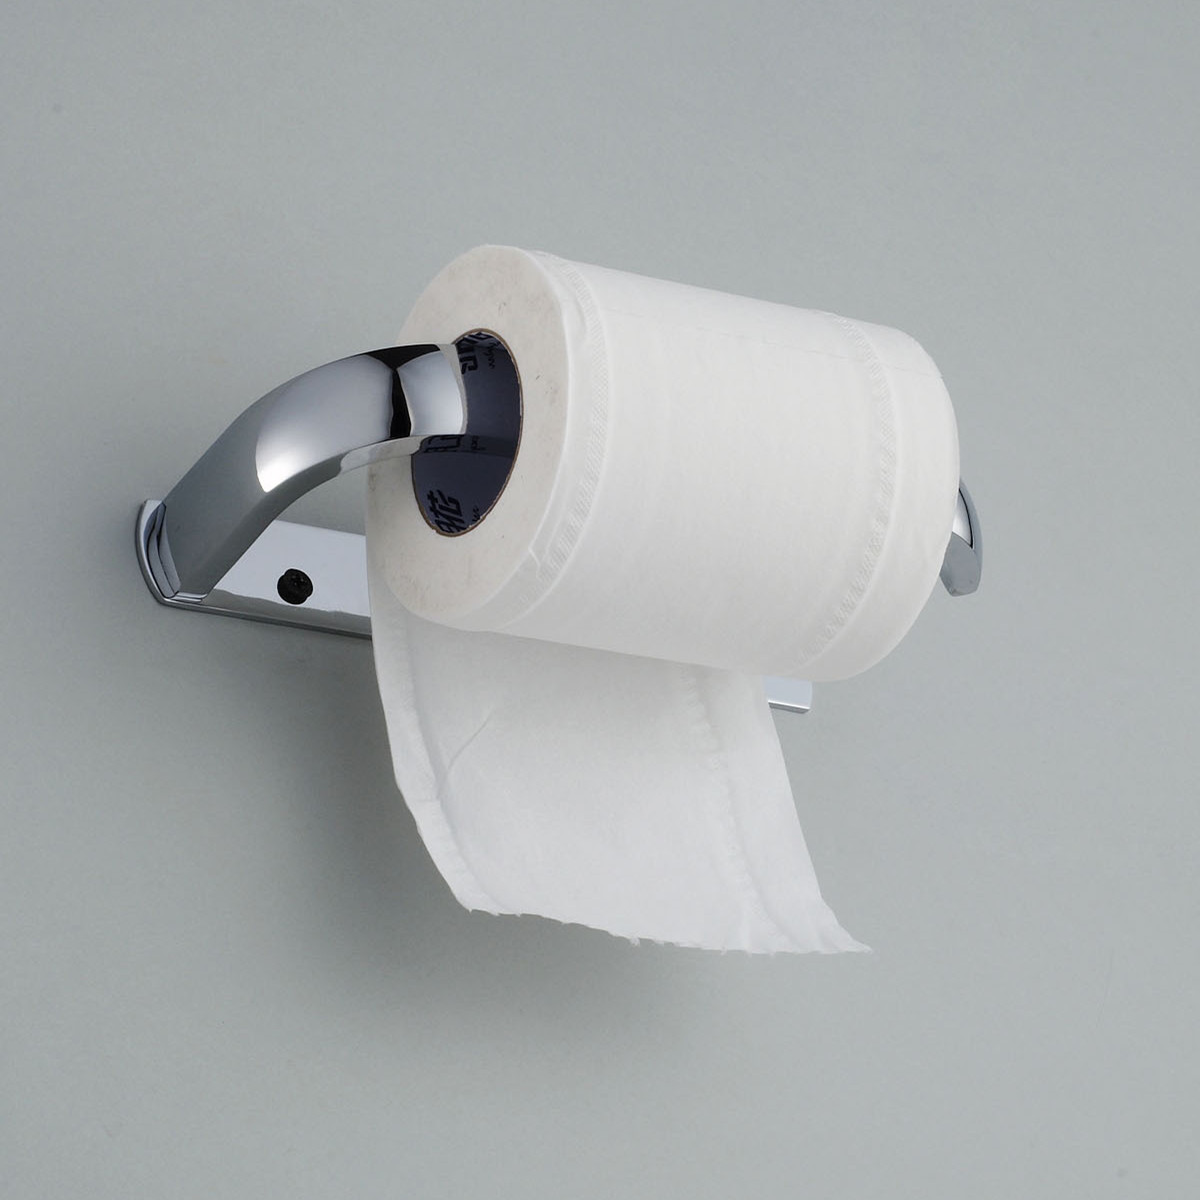 Stainless-Steel-Bathroom-Paper-Shelf-Holder-Tissue-Roll-Rack-Stand-Brecket-Wall-Mount-1333052-9